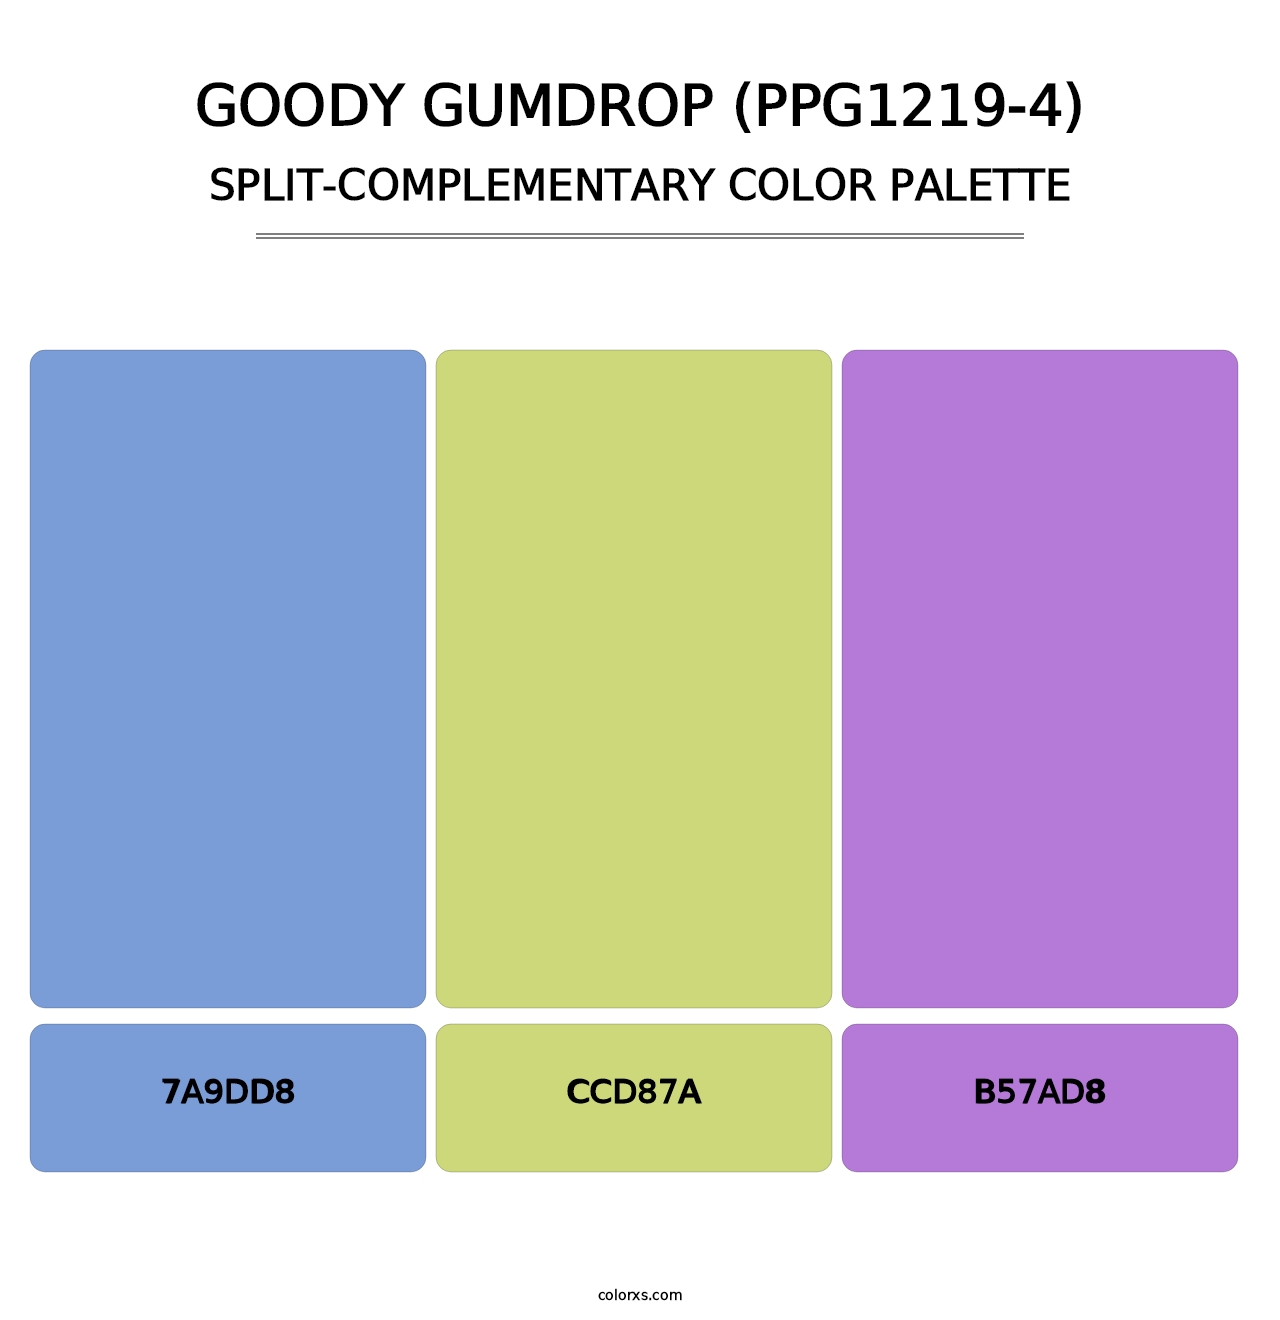 Goody Gumdrop (PPG1219-4) - Split-Complementary Color Palette